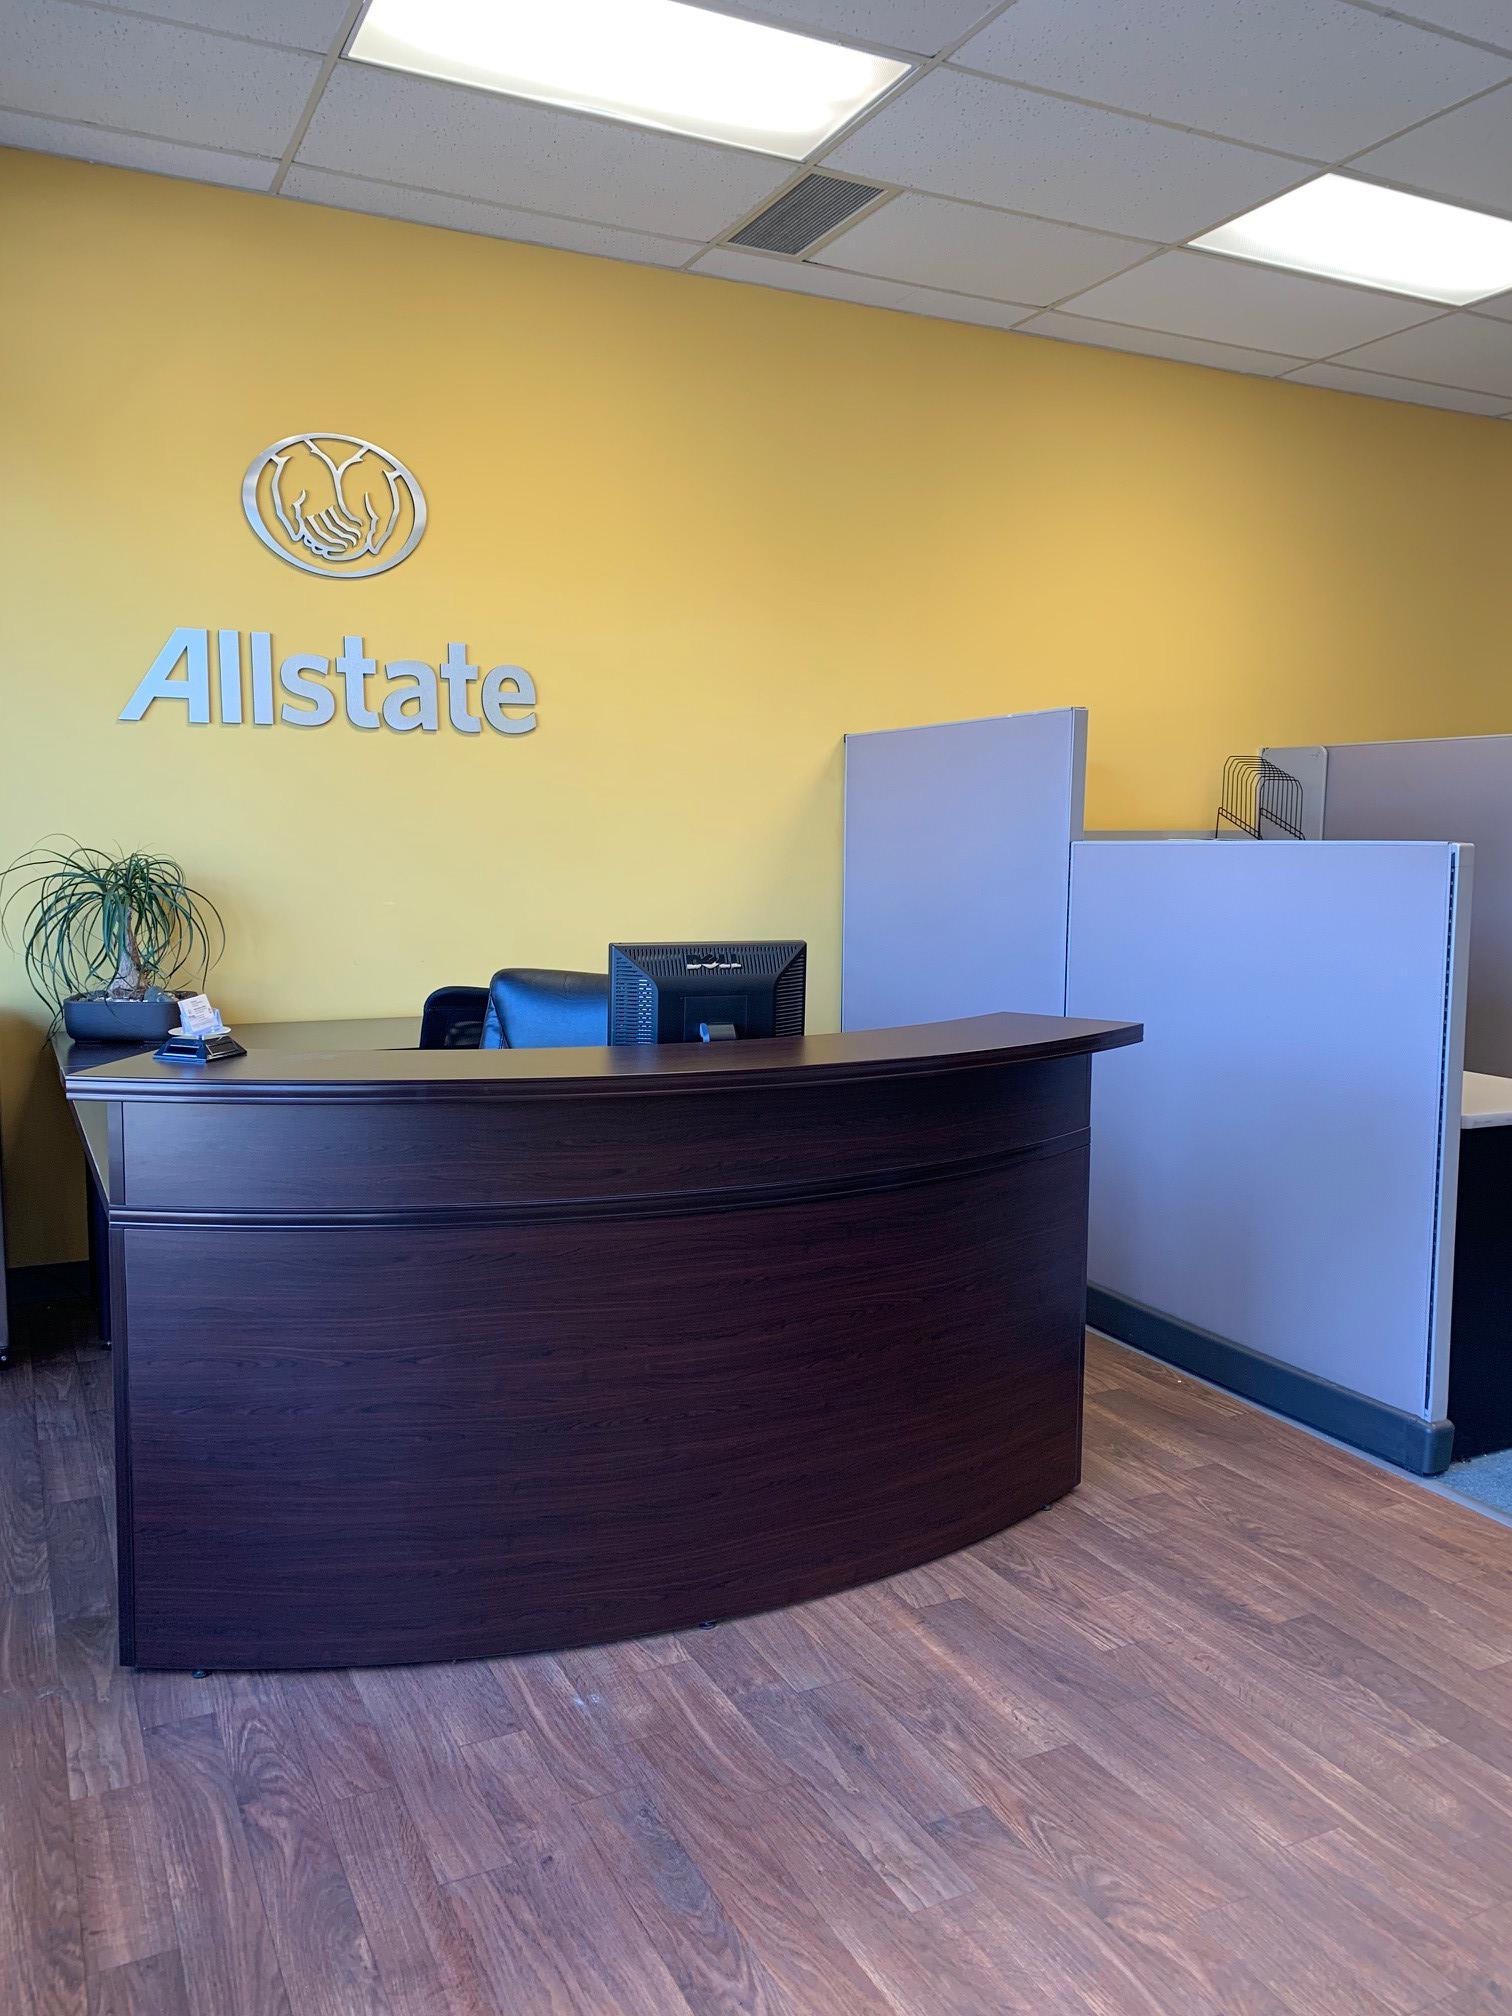 Hassan Farhat: Allstate Insurance Westland (248)461-3221